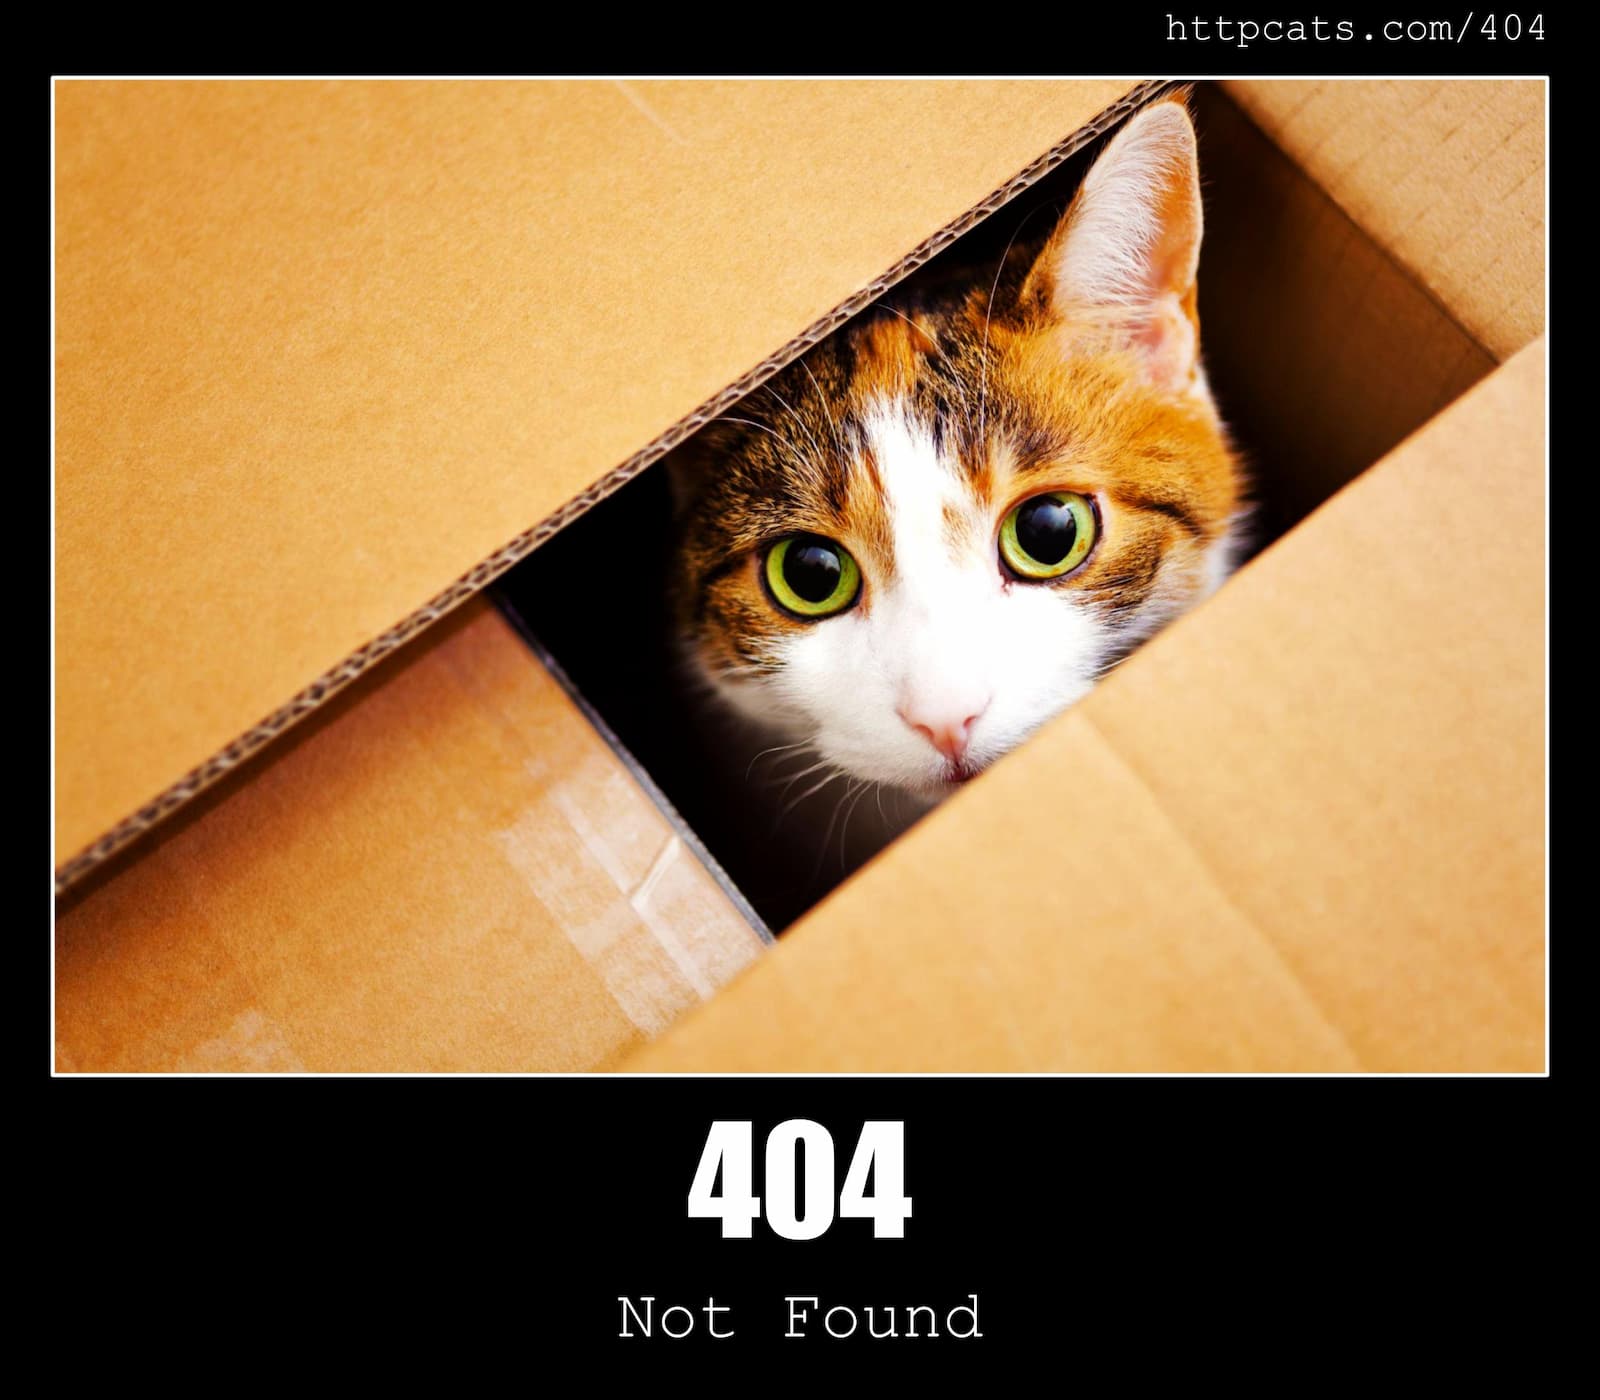 HTTP Status Code 404 Not Found & Cats